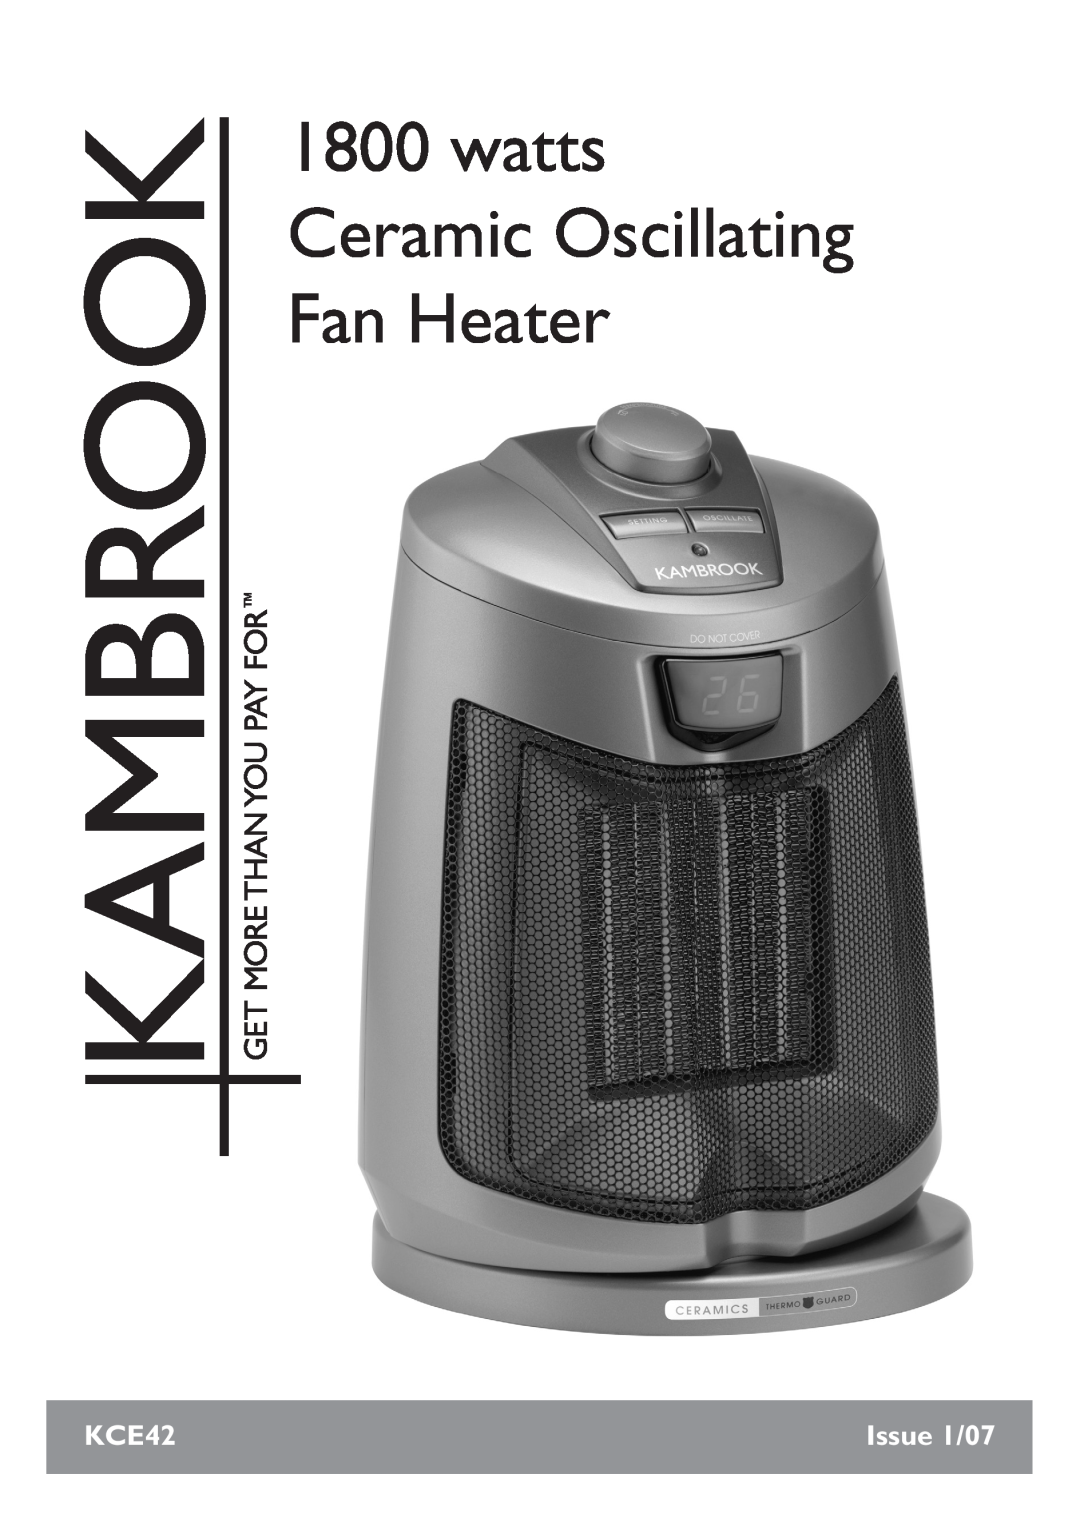 Kambrook KCE42 manual watts Ceramic Oscillating Fan Heater, Issue 1/07 